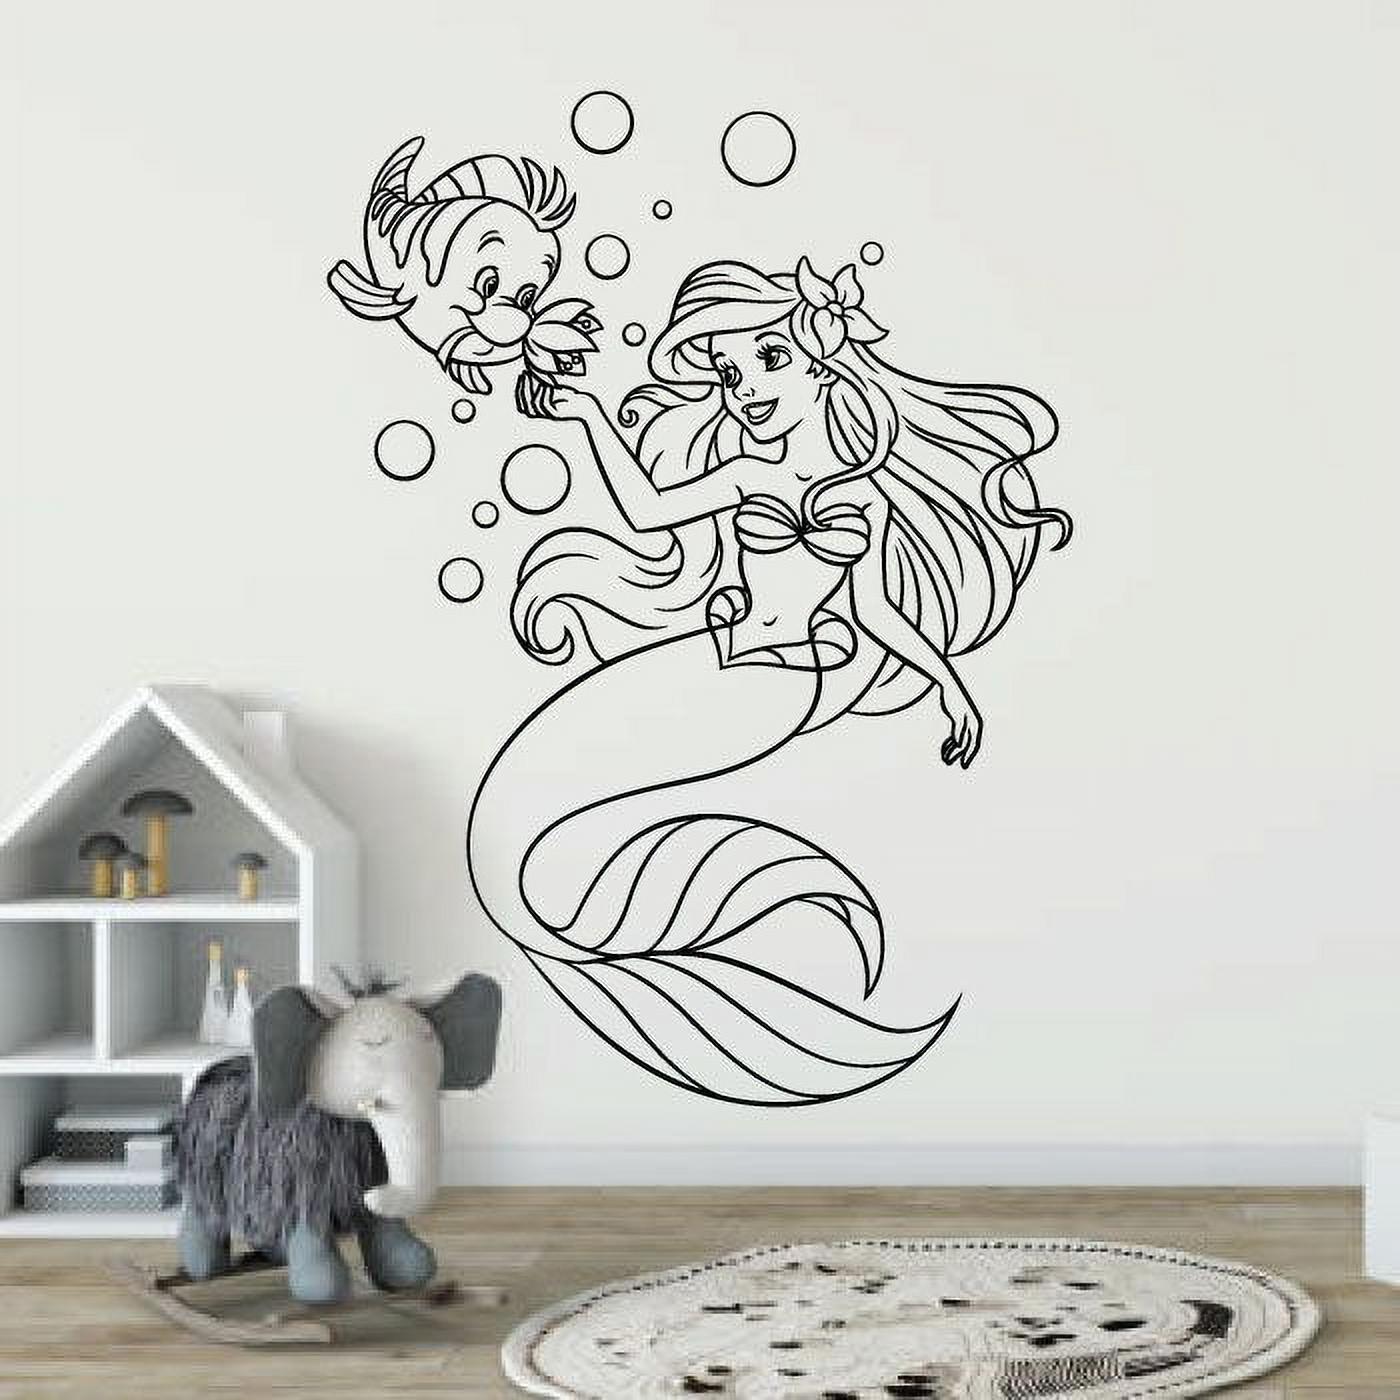 Cute Flaunder Fish And Ariel Disney Princess The Little Mermaid Cute Best Friends Little Mermaid Vinyl Wall Art Sticker Decal Home Room Baby Girls Teens Mermaid Wall Décor Design Size (20x20 inch) - image 1 of 2